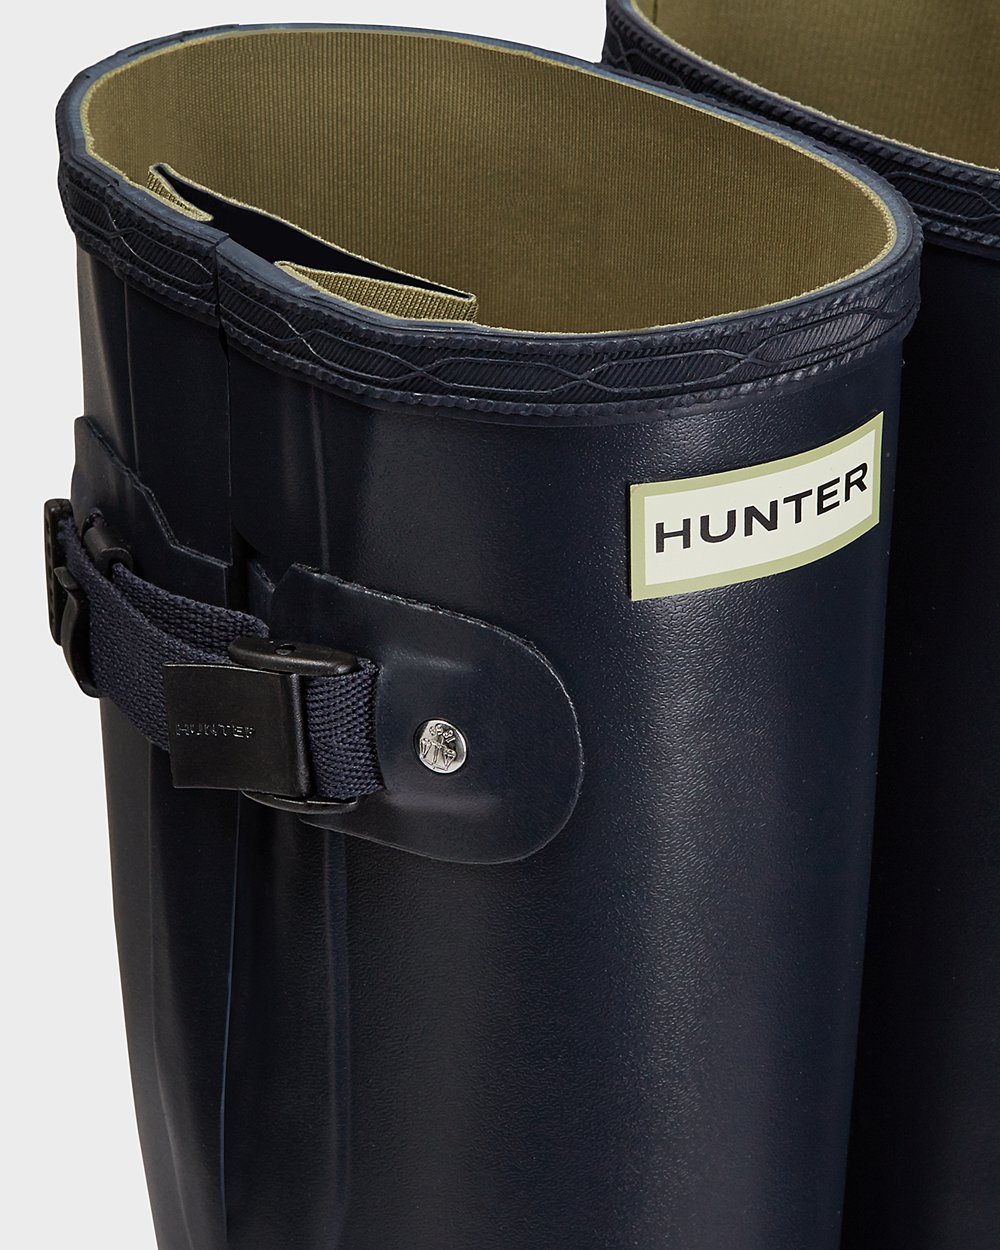 Womens Tall Rain Boots - Hunter Norris Field Side Adjustable (18HKCRASJ) - Navy